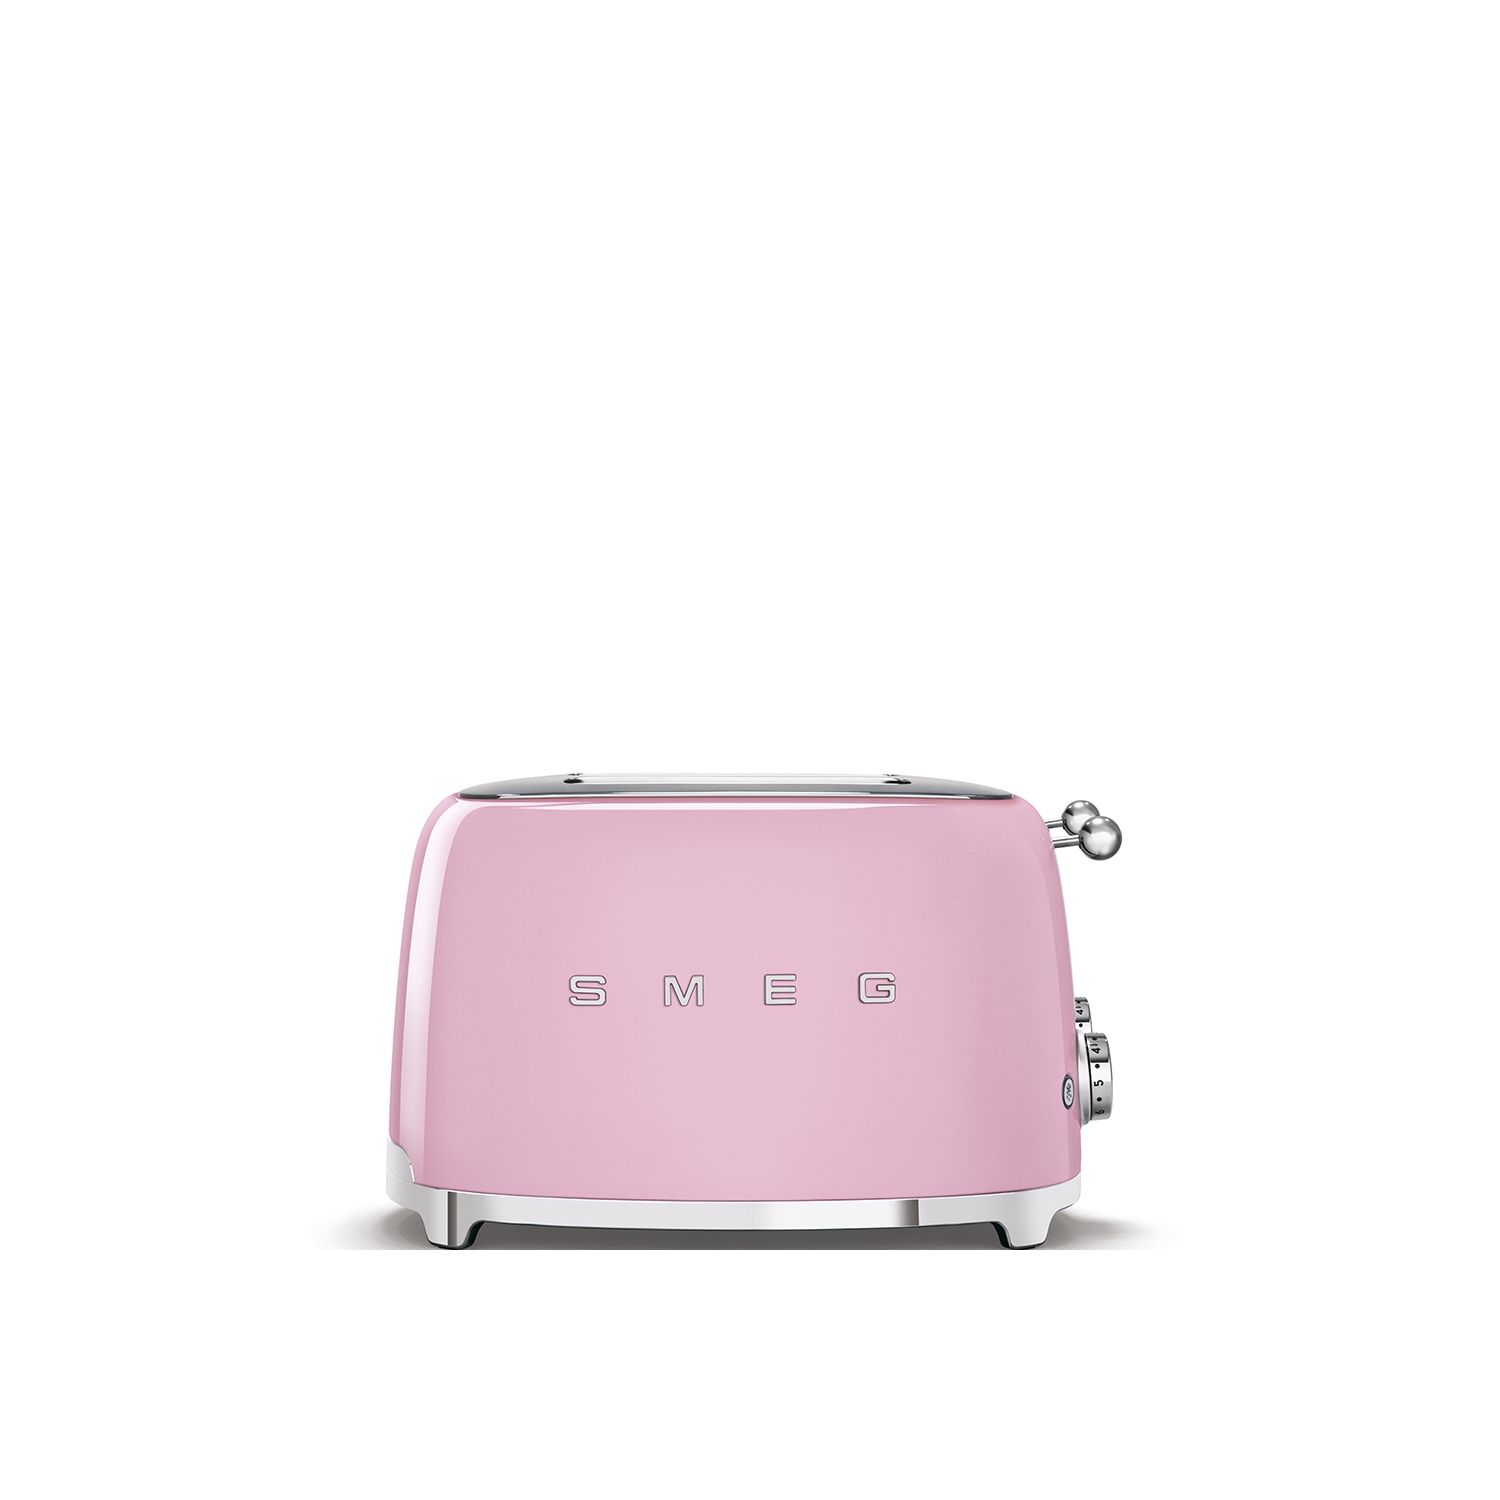 Smeg 4 Slice Toaster - Pink - 0